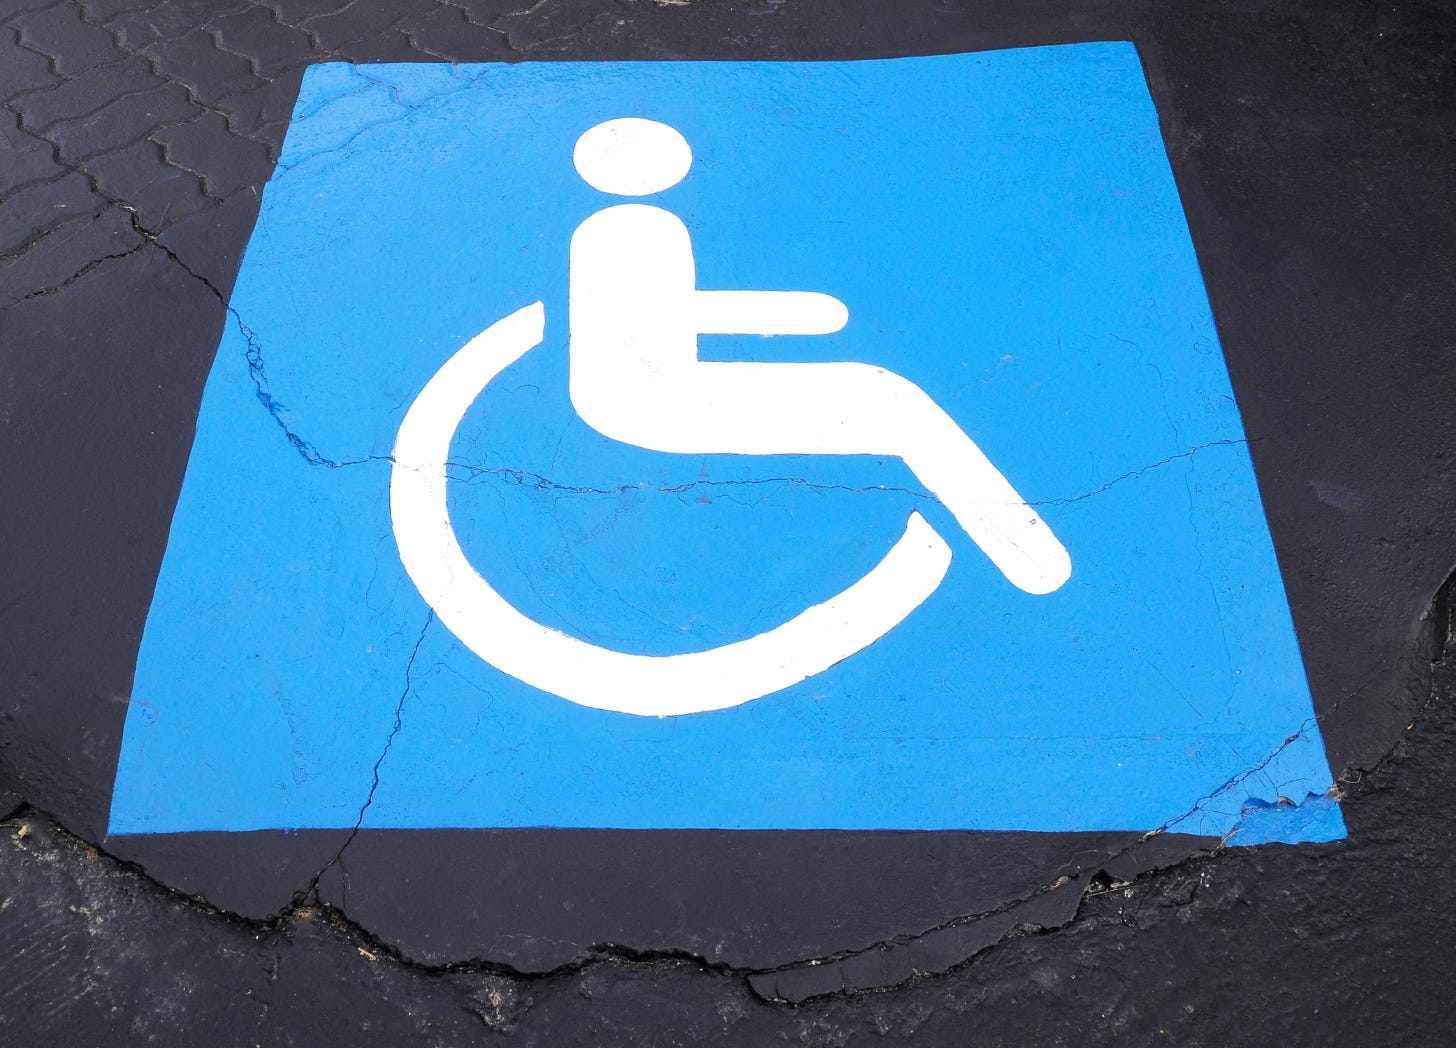 Wheelchair symbol painted onto pavement